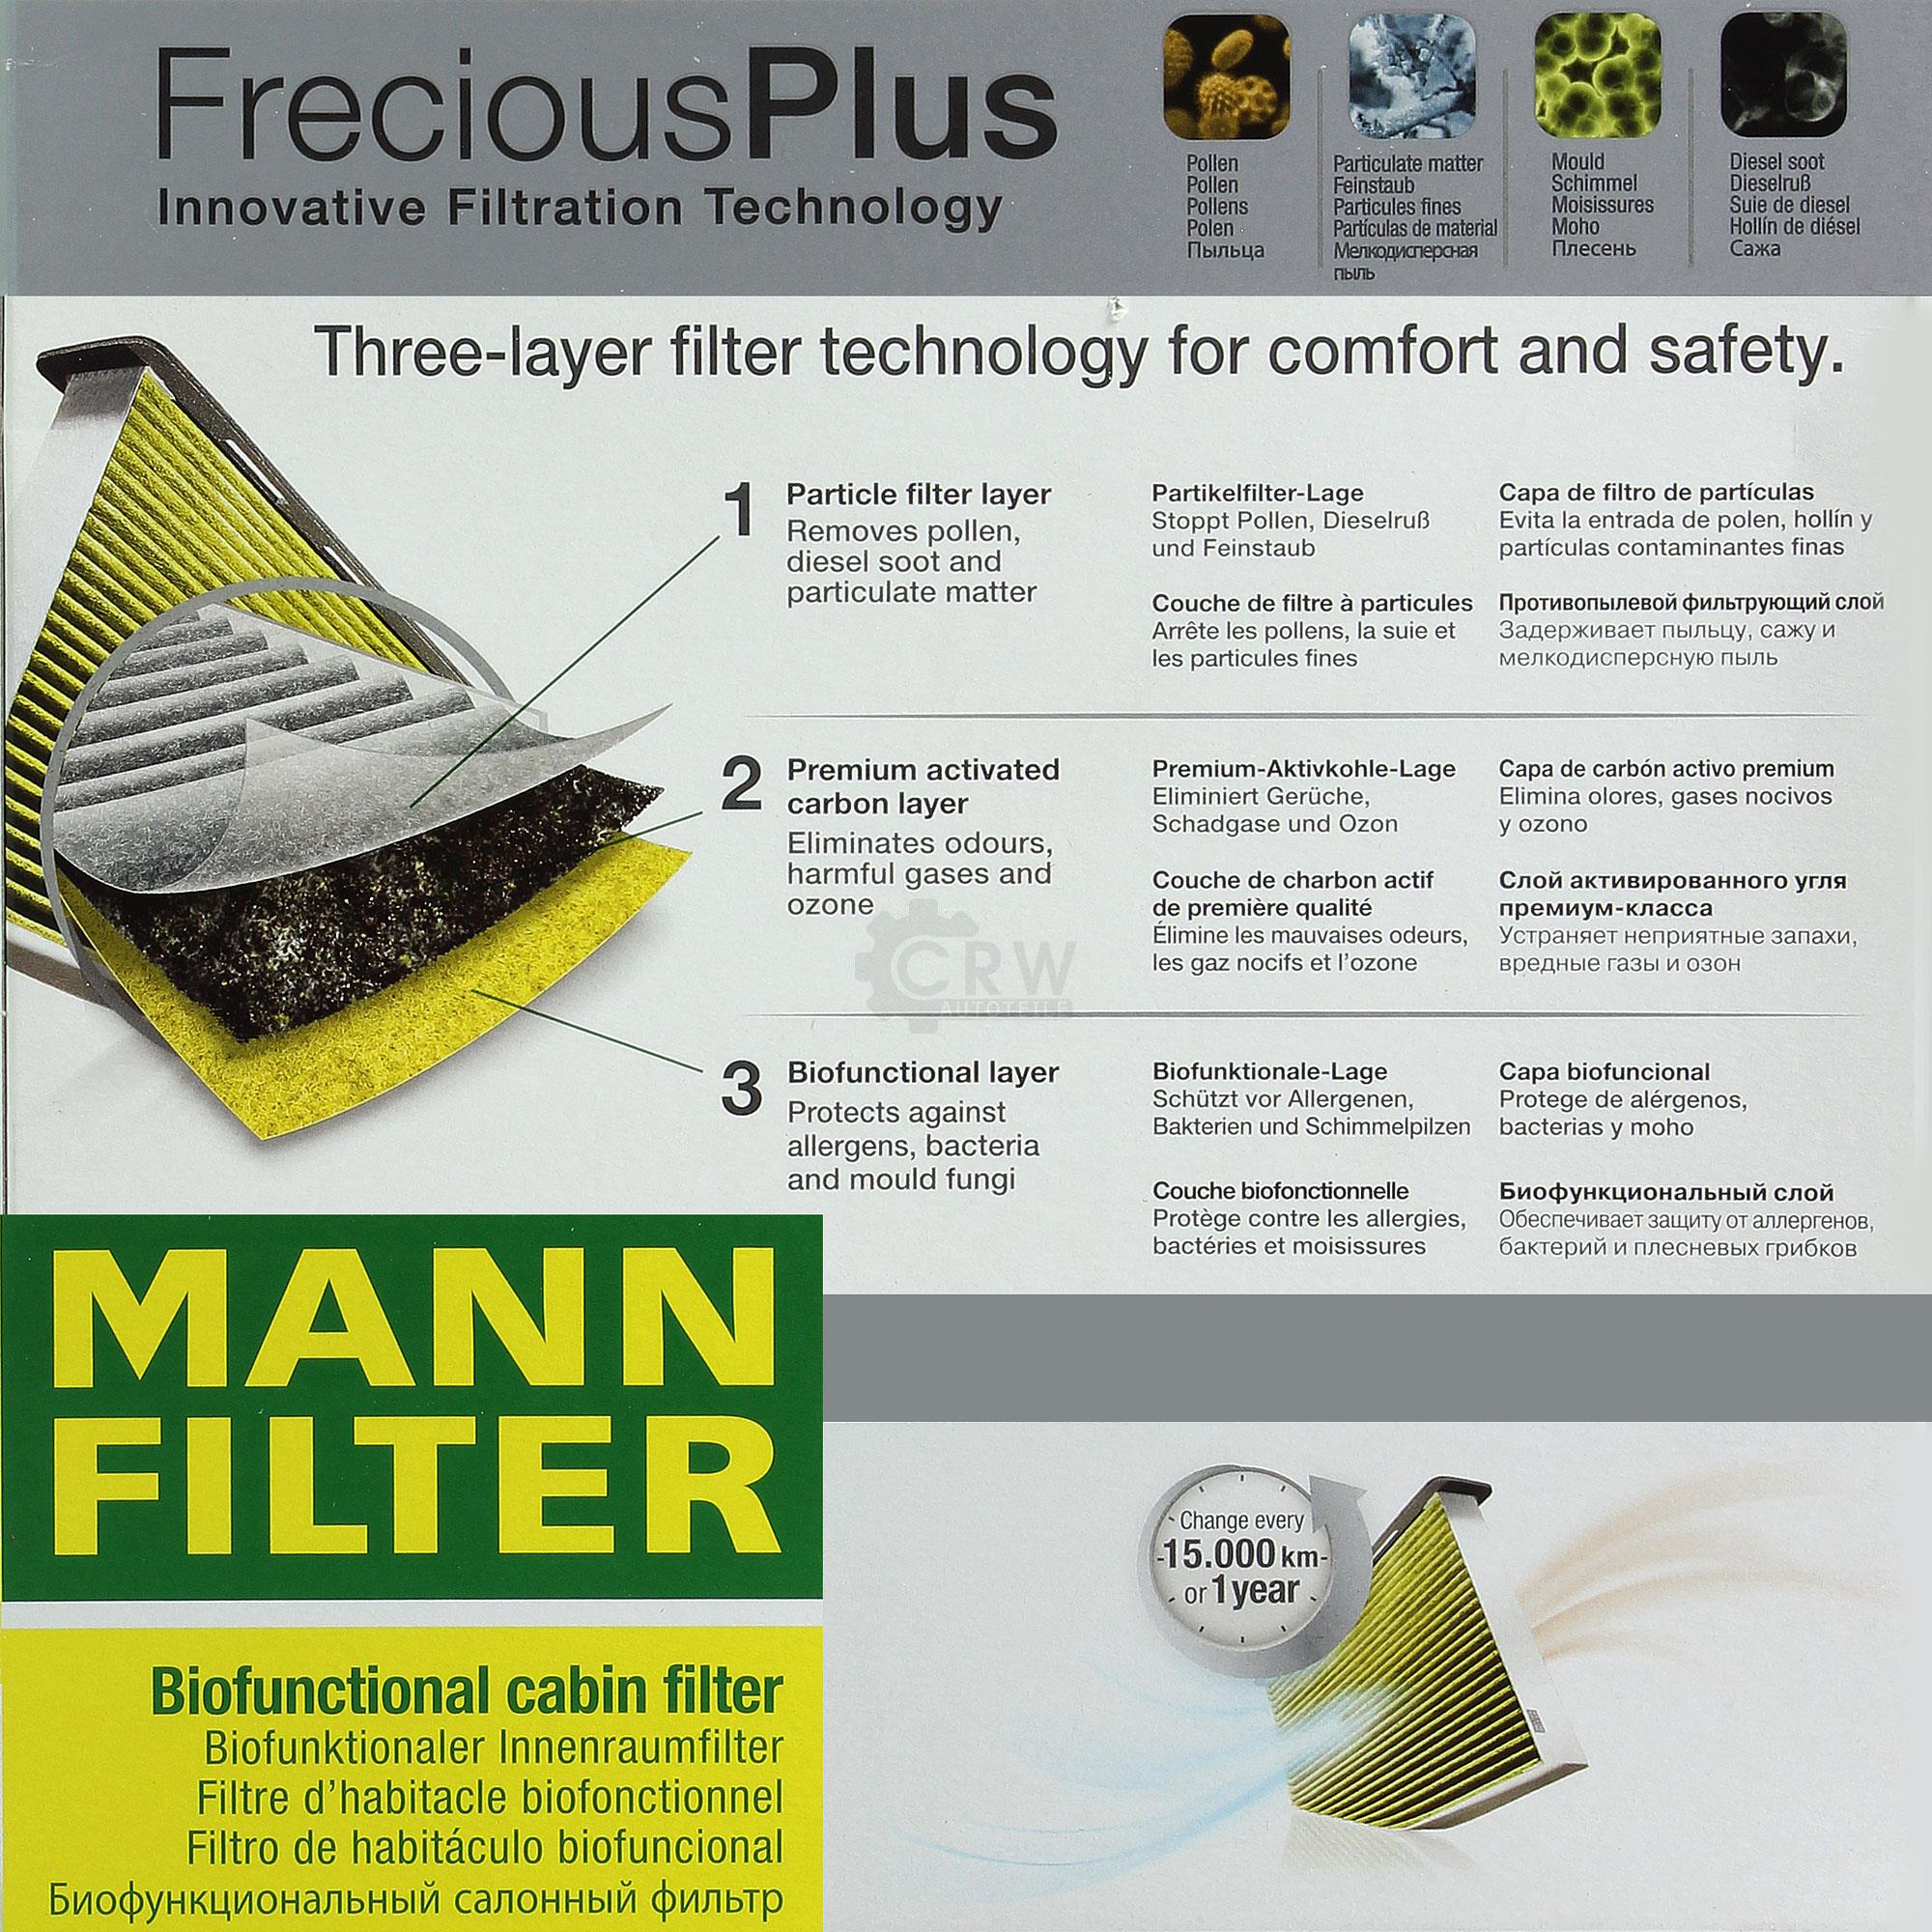 MANN-Filter Innenraumfilter Biofunctional für Allergiker FP 1829